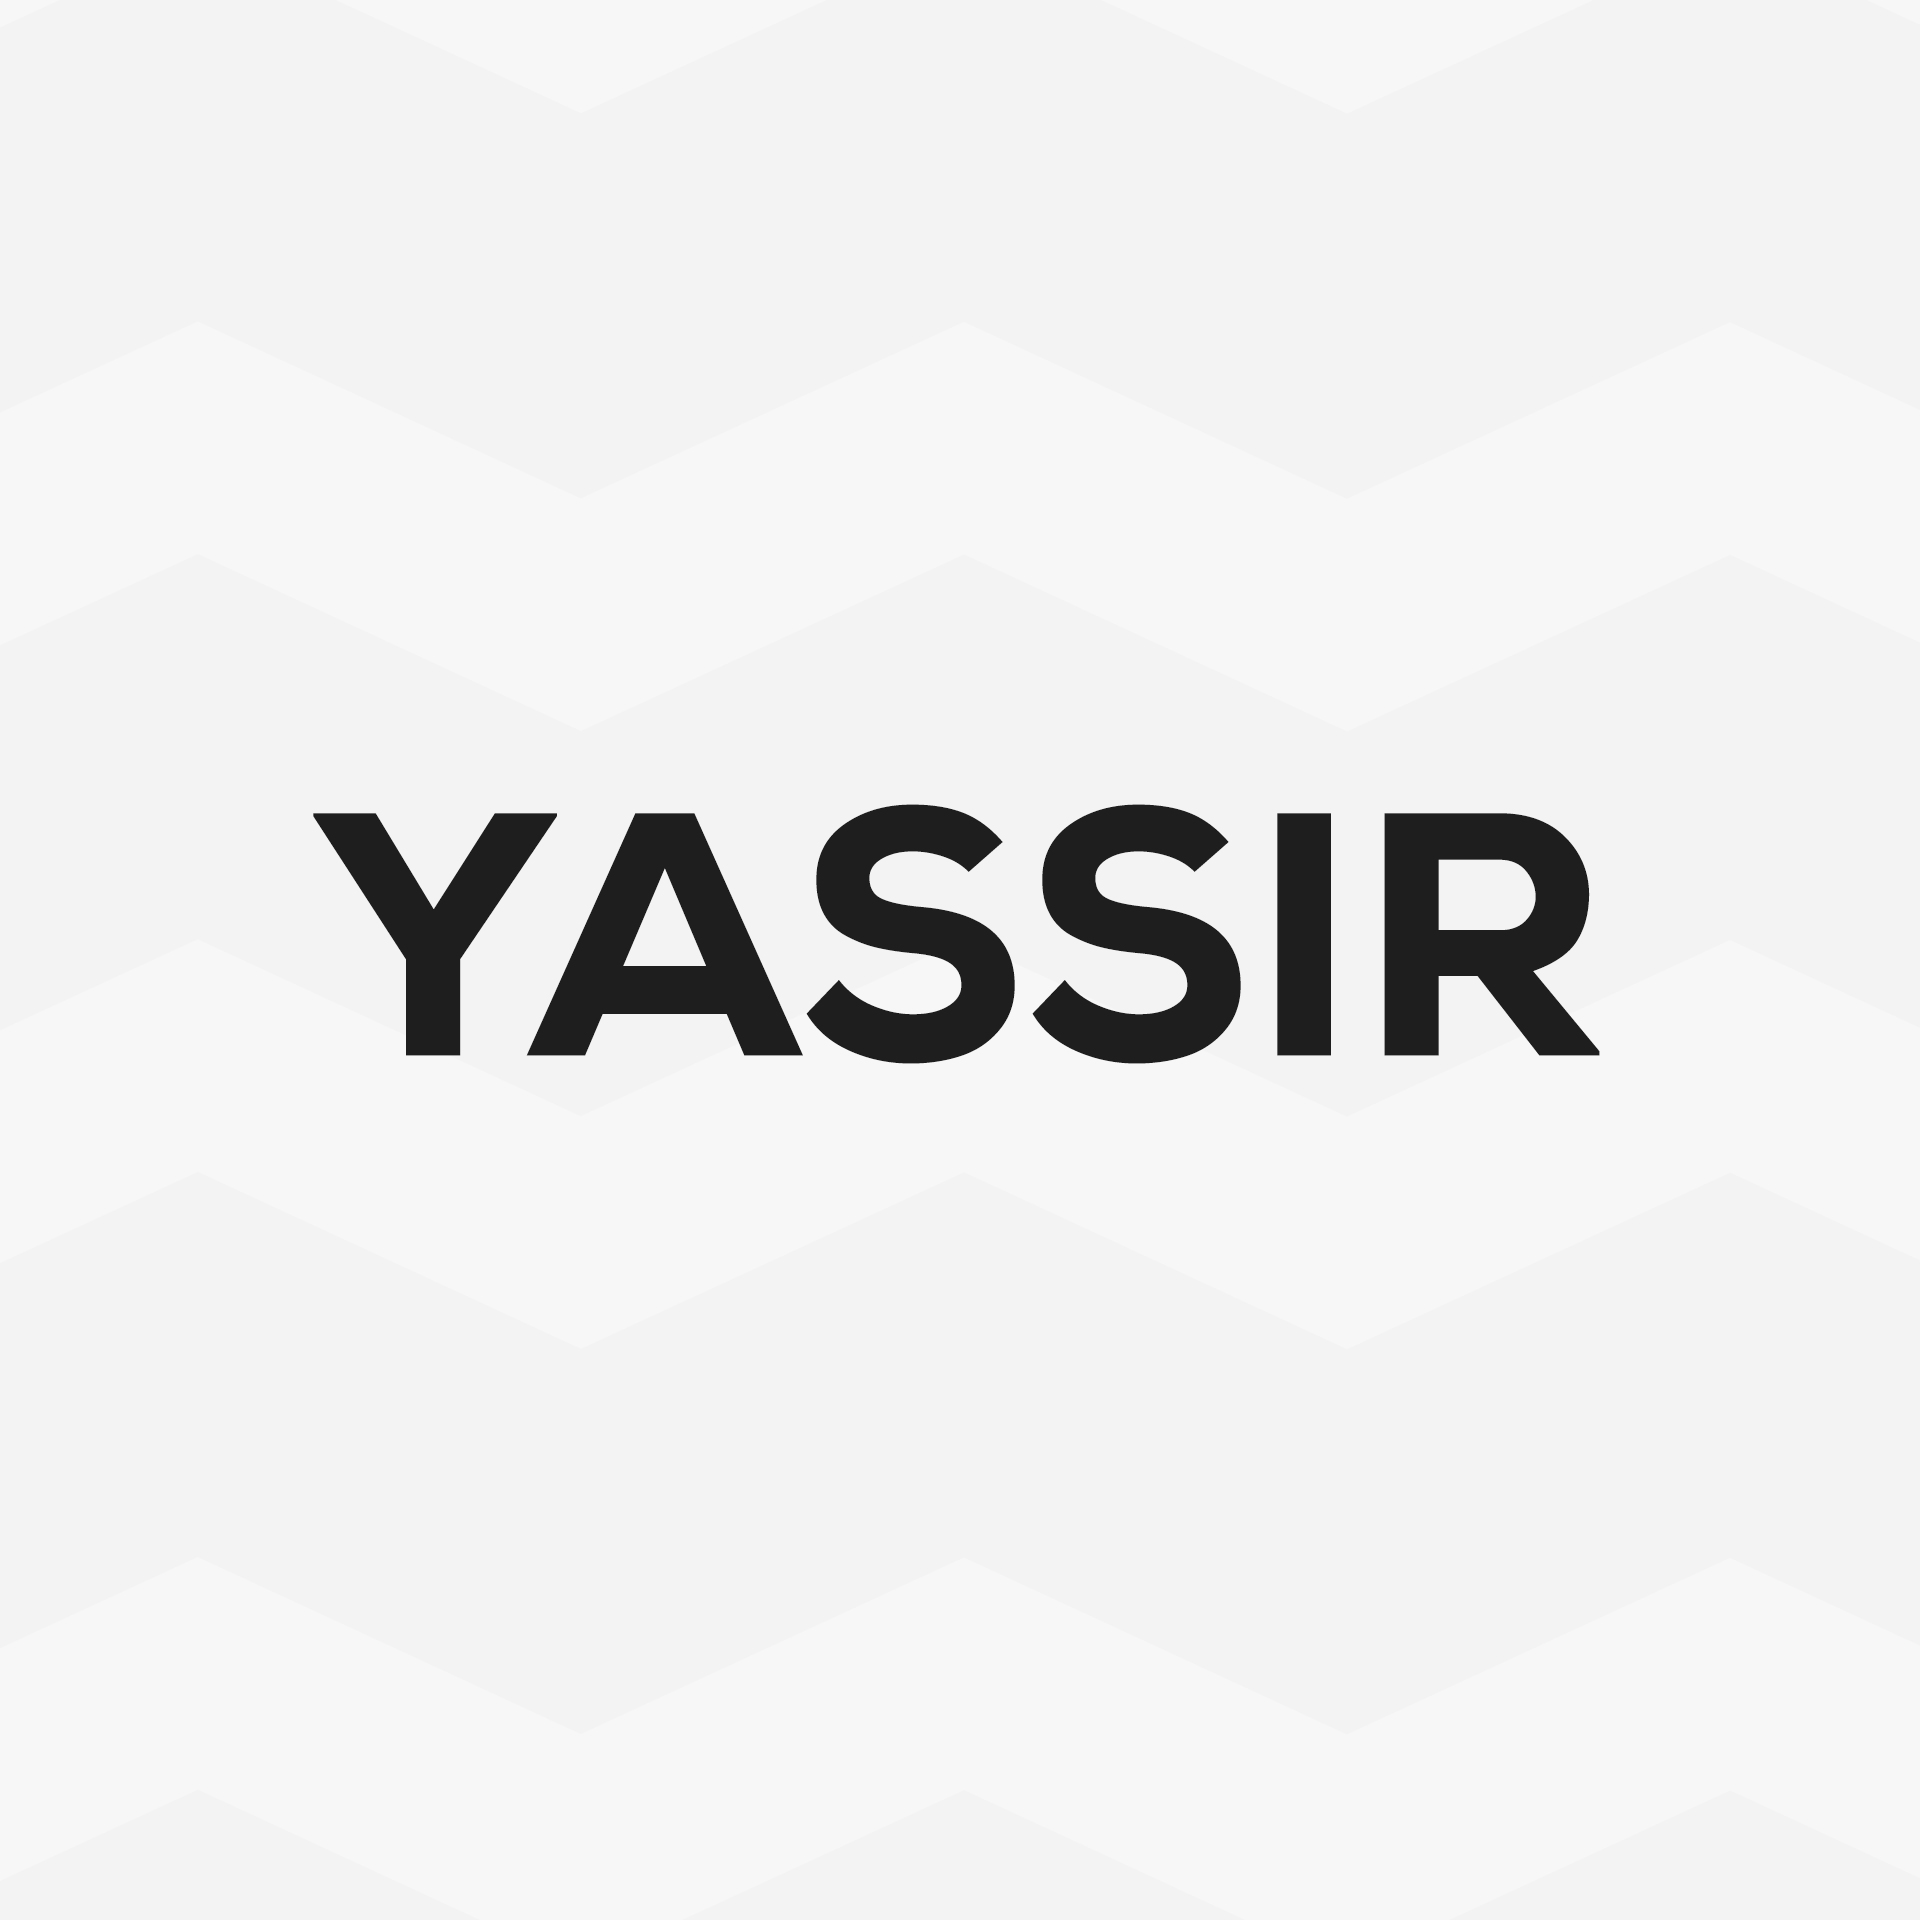 Yassi Company Profile